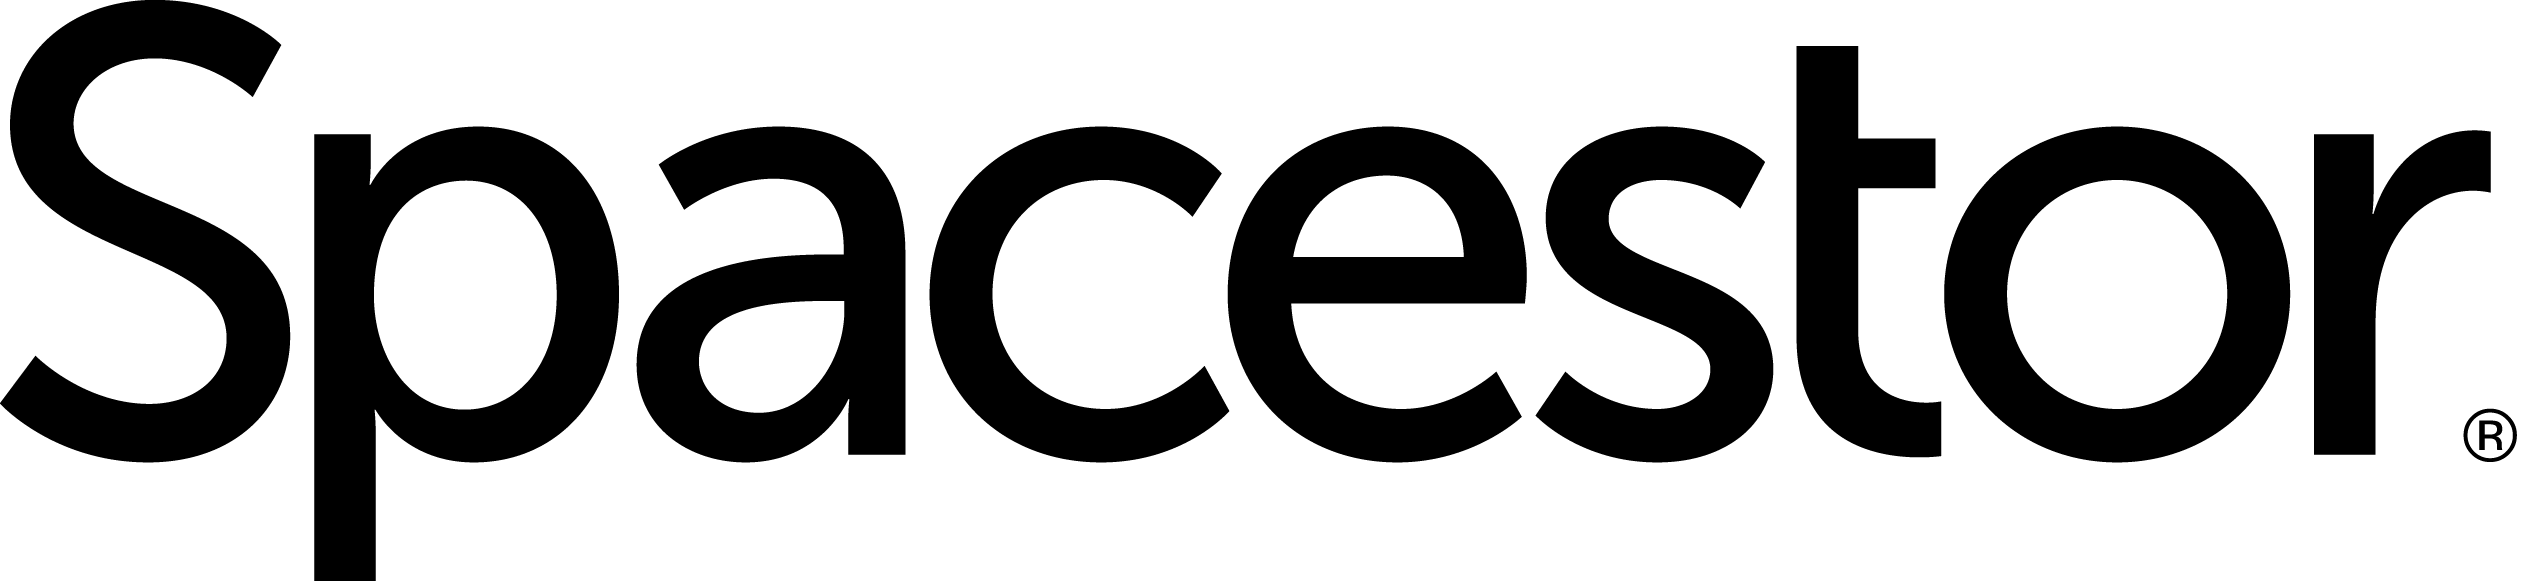 Spacestor-updated-Logo